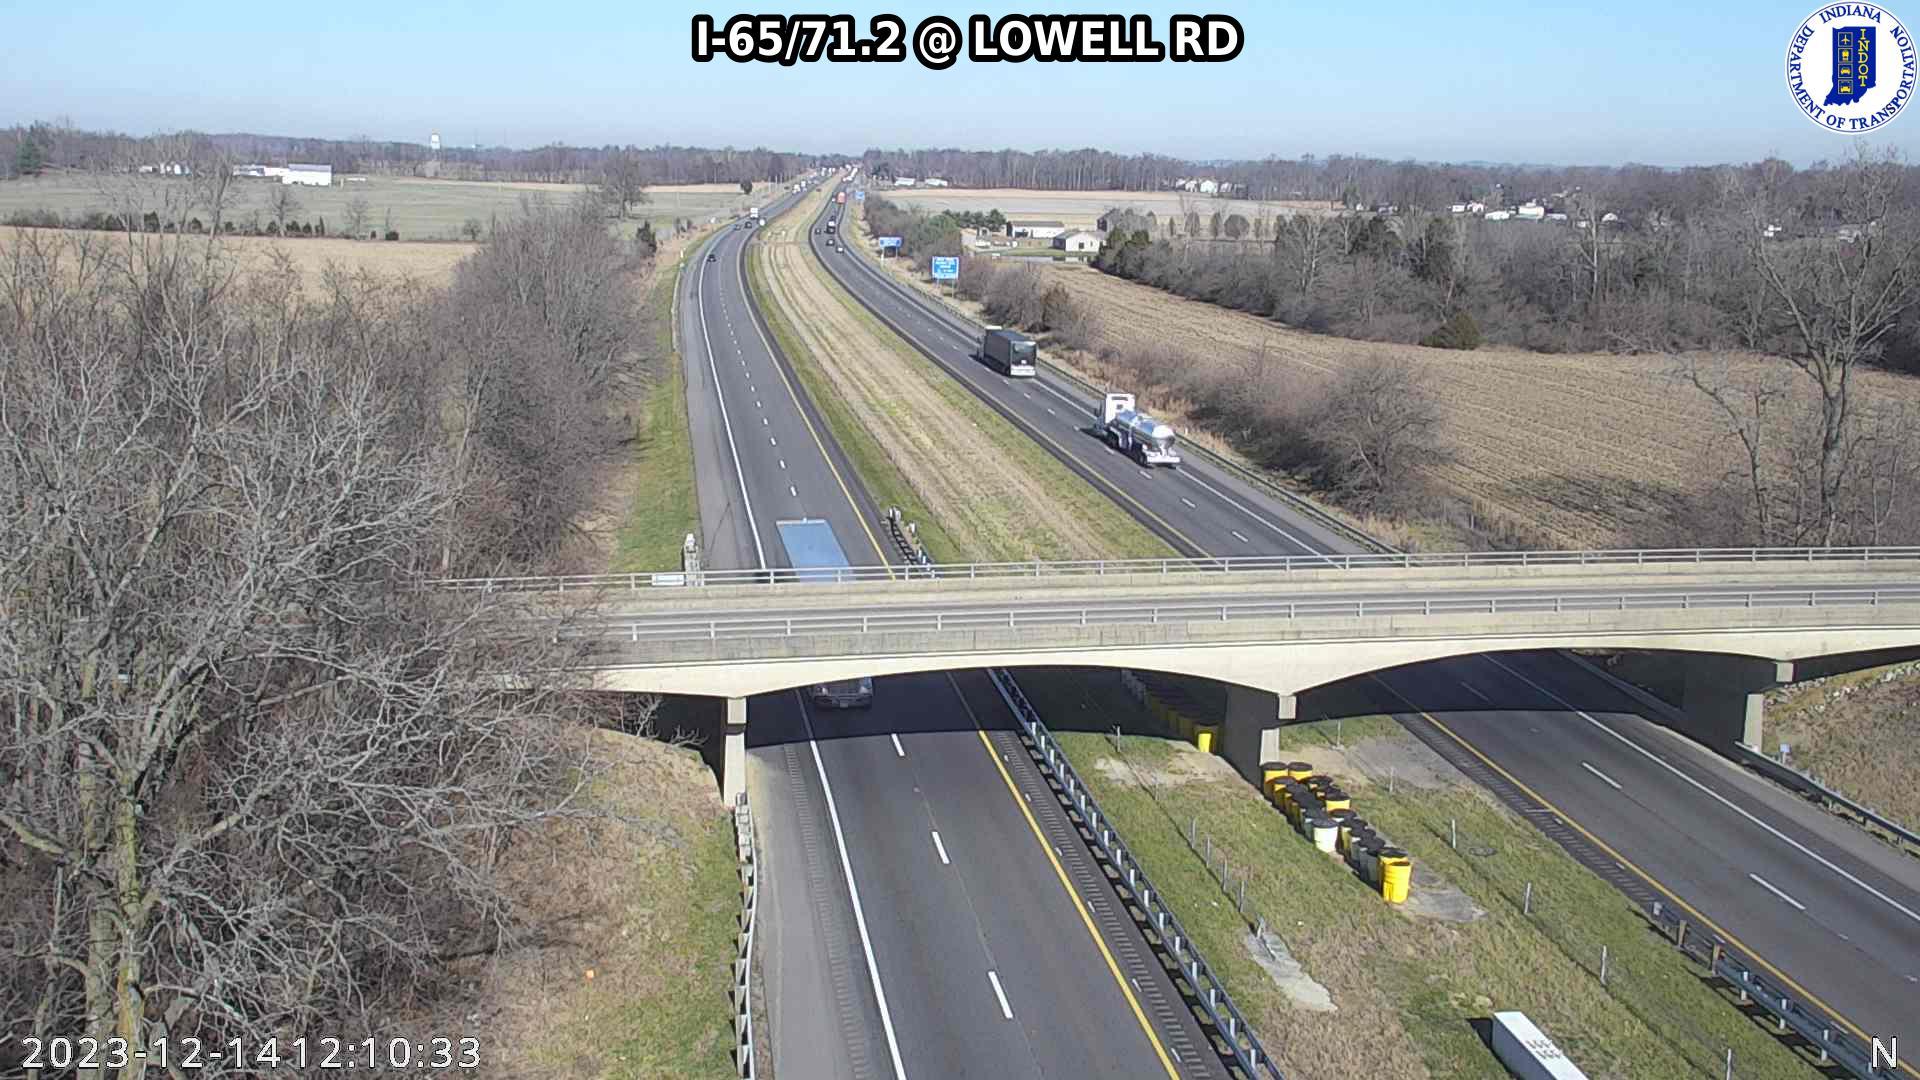 Traffic Cam Lowell: I-65: I-65/71.2 - Rd Player